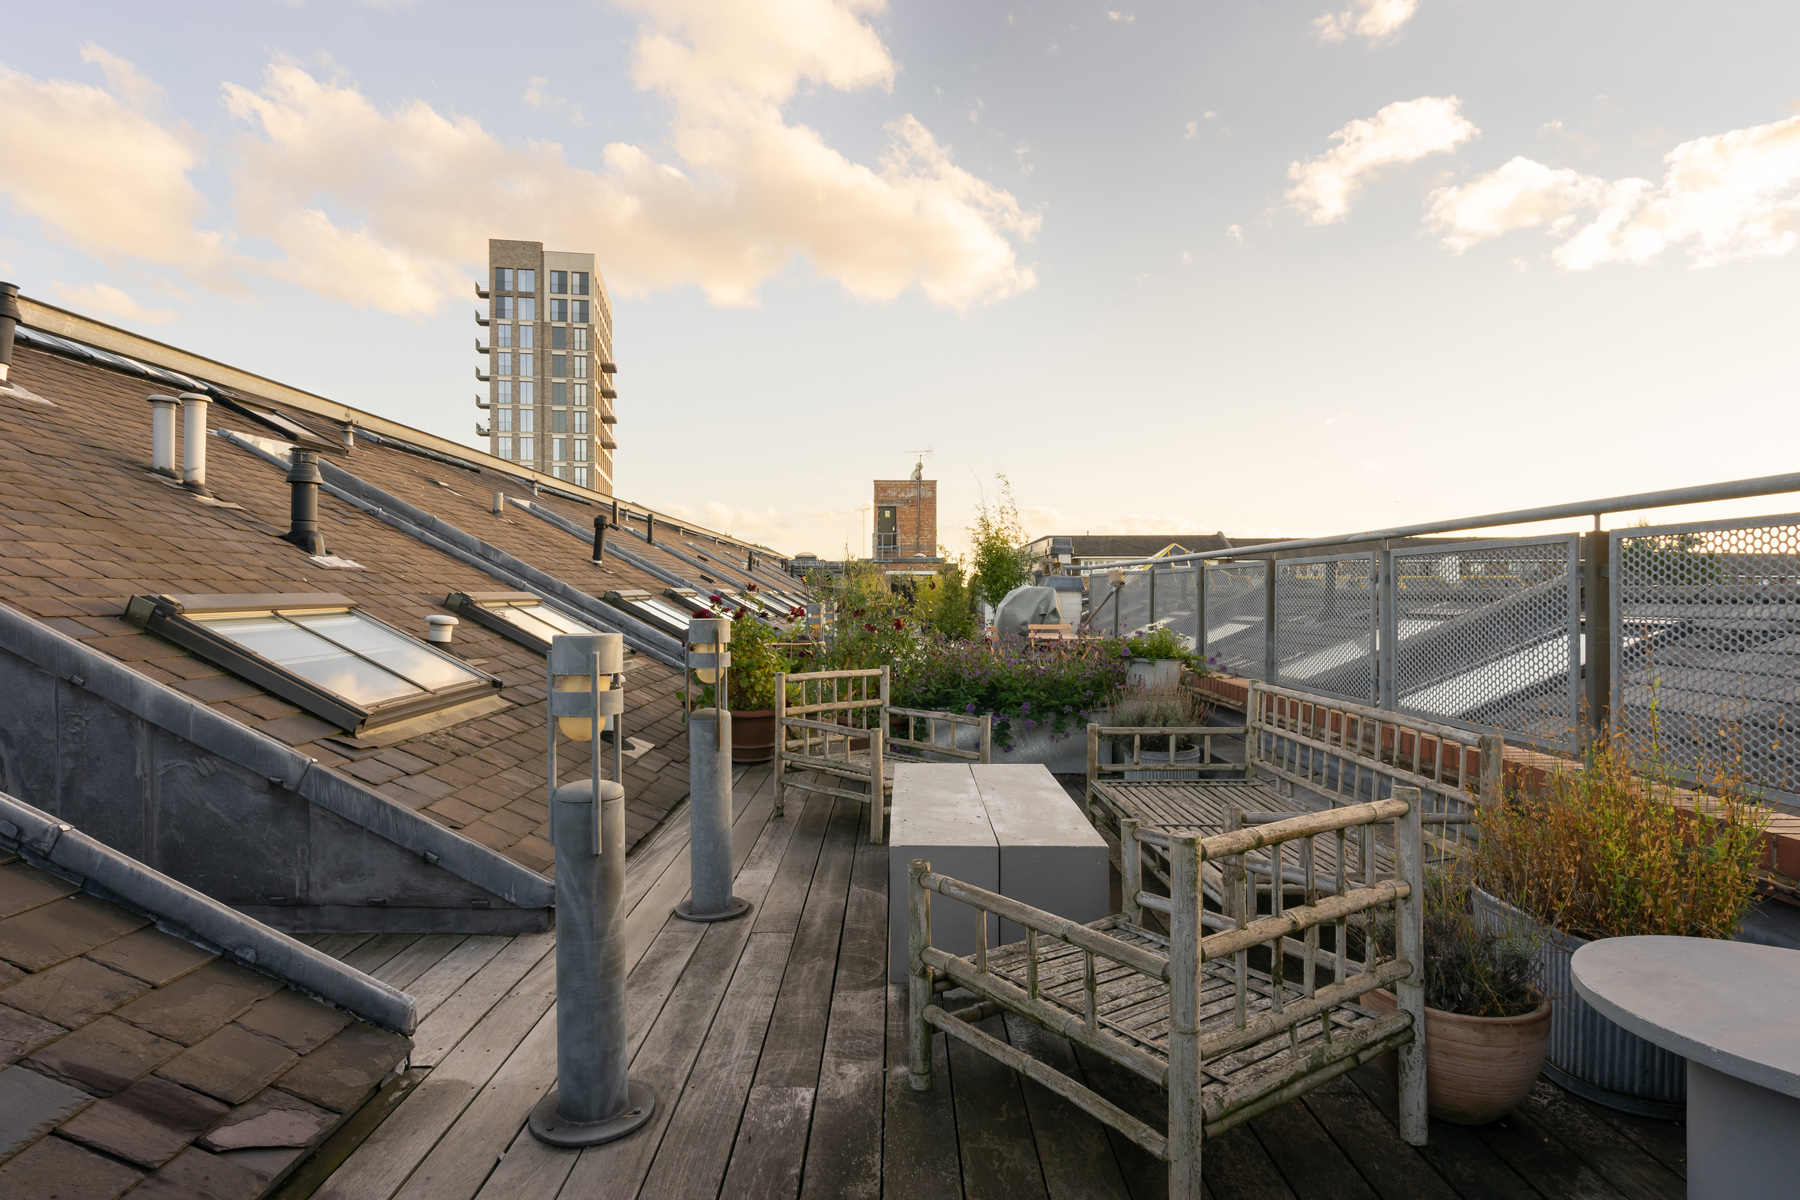 Roof Terrace at Harrow Road, Maida Vale